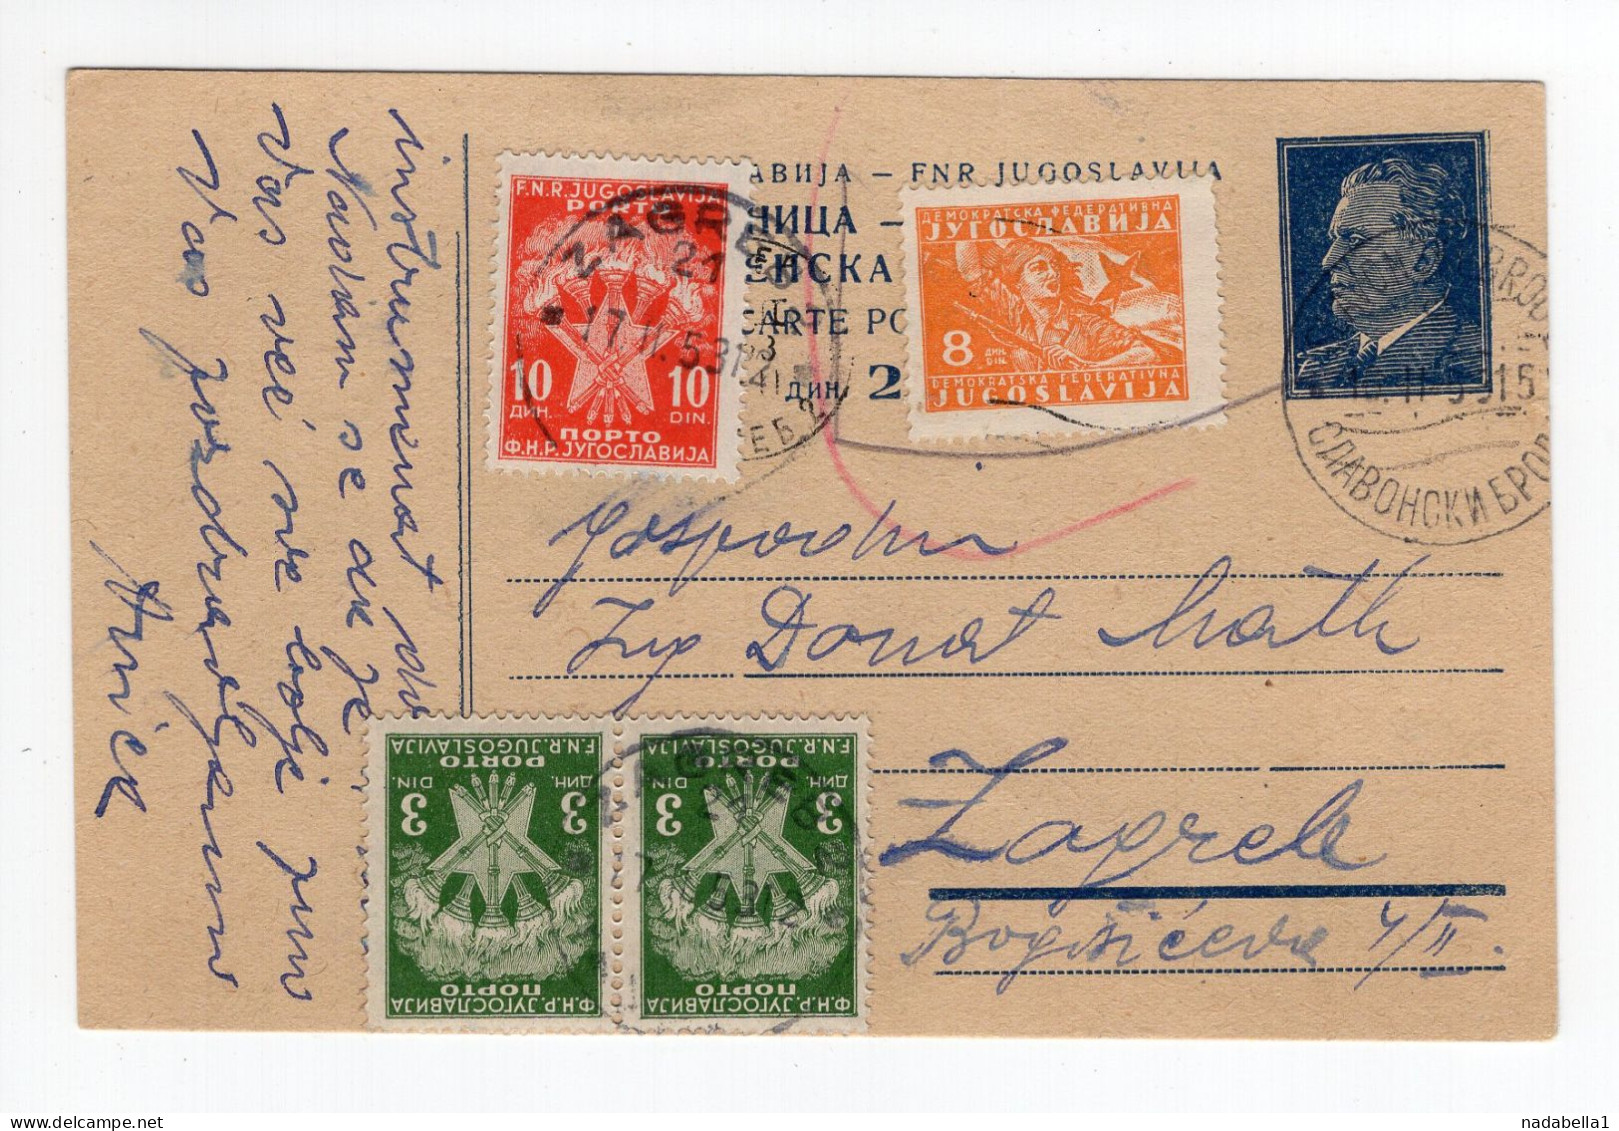 1953. YUGOSLAVIA,CROATIA,SLAVONSKI BROD,STATIONERY CARD,USED,POSTAGE DUE IN ZAGREB - Impuestos